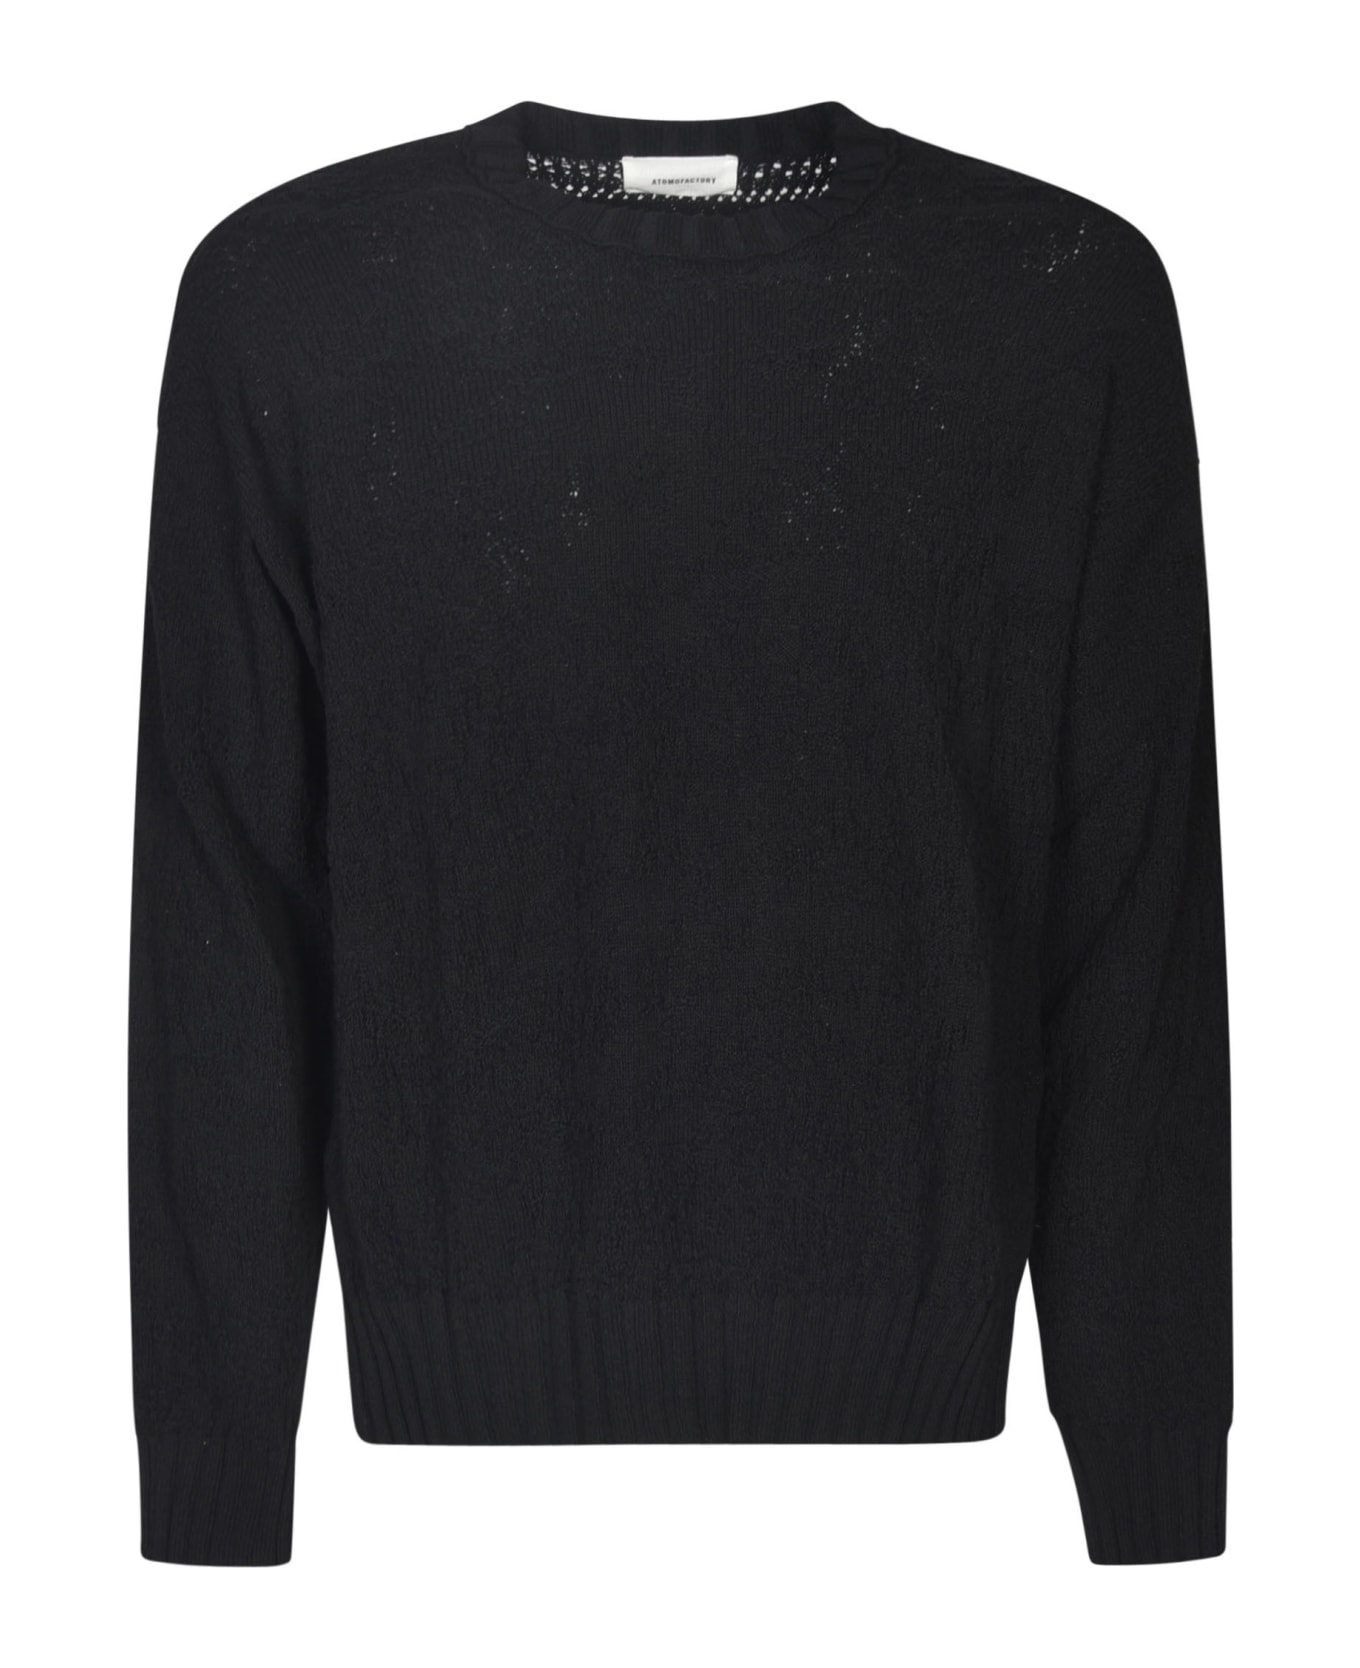 Atomo Factory Knitted Sweatshirt - Black